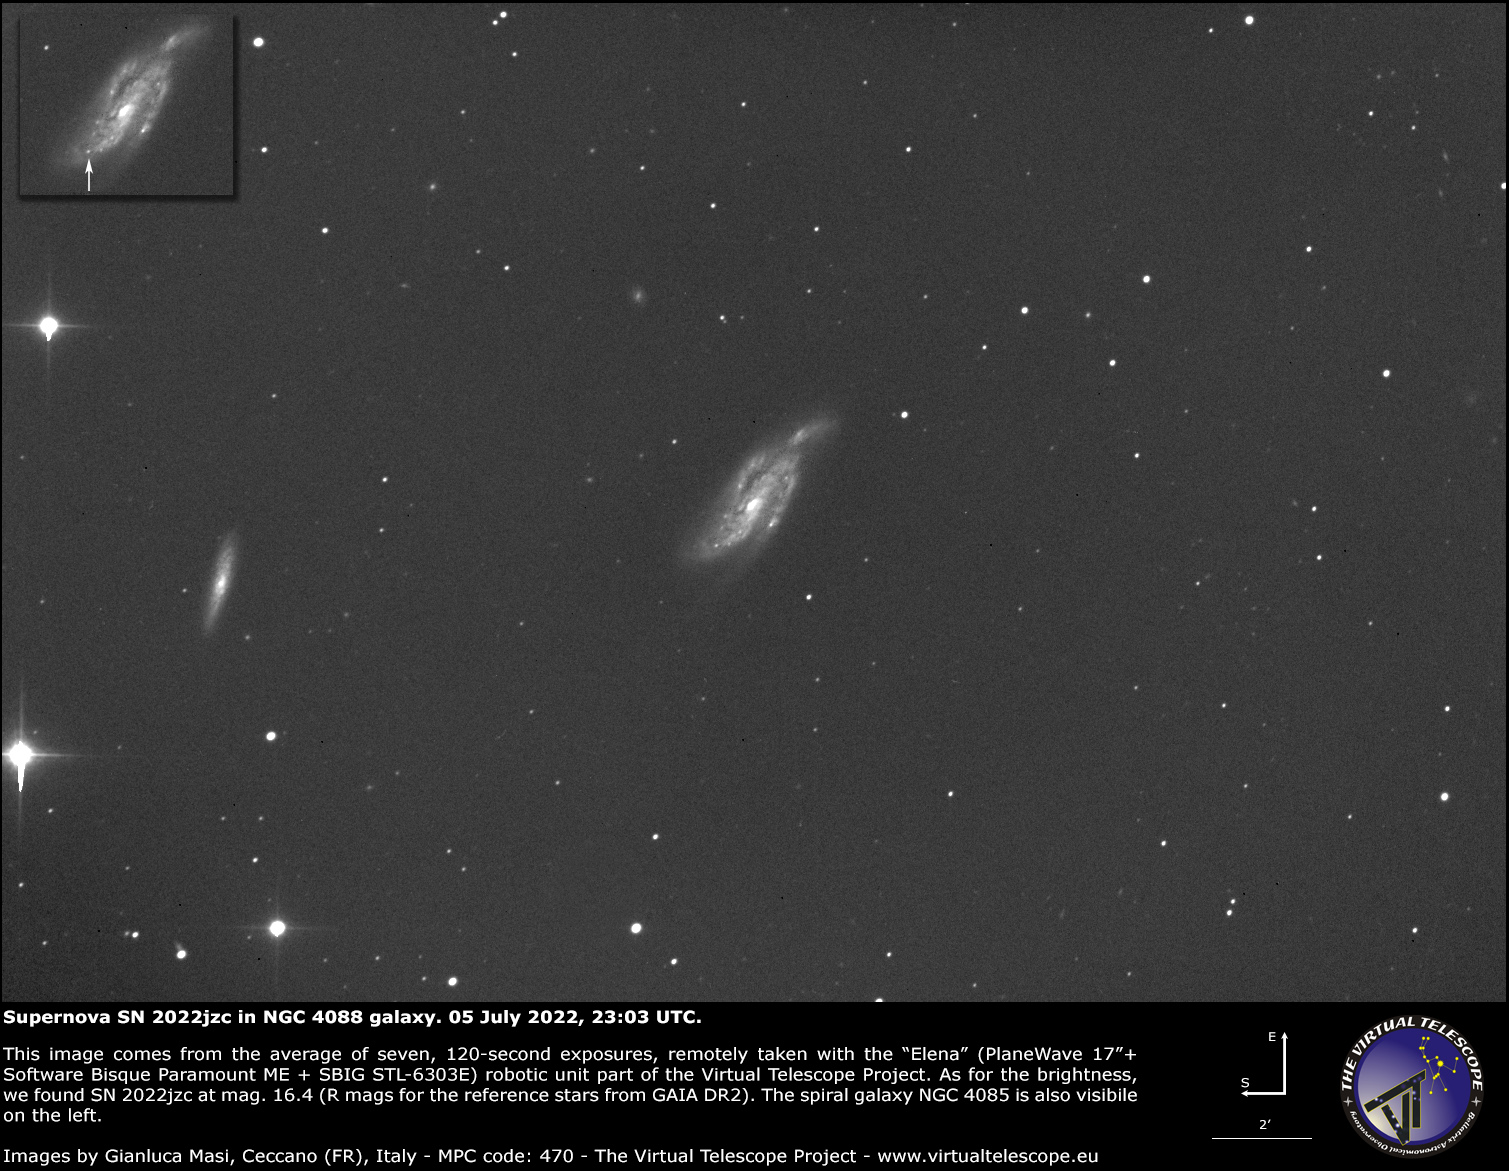 Supernova SN 2022jzc in NGC 4088 spiral galaxy: 5 July 2022.